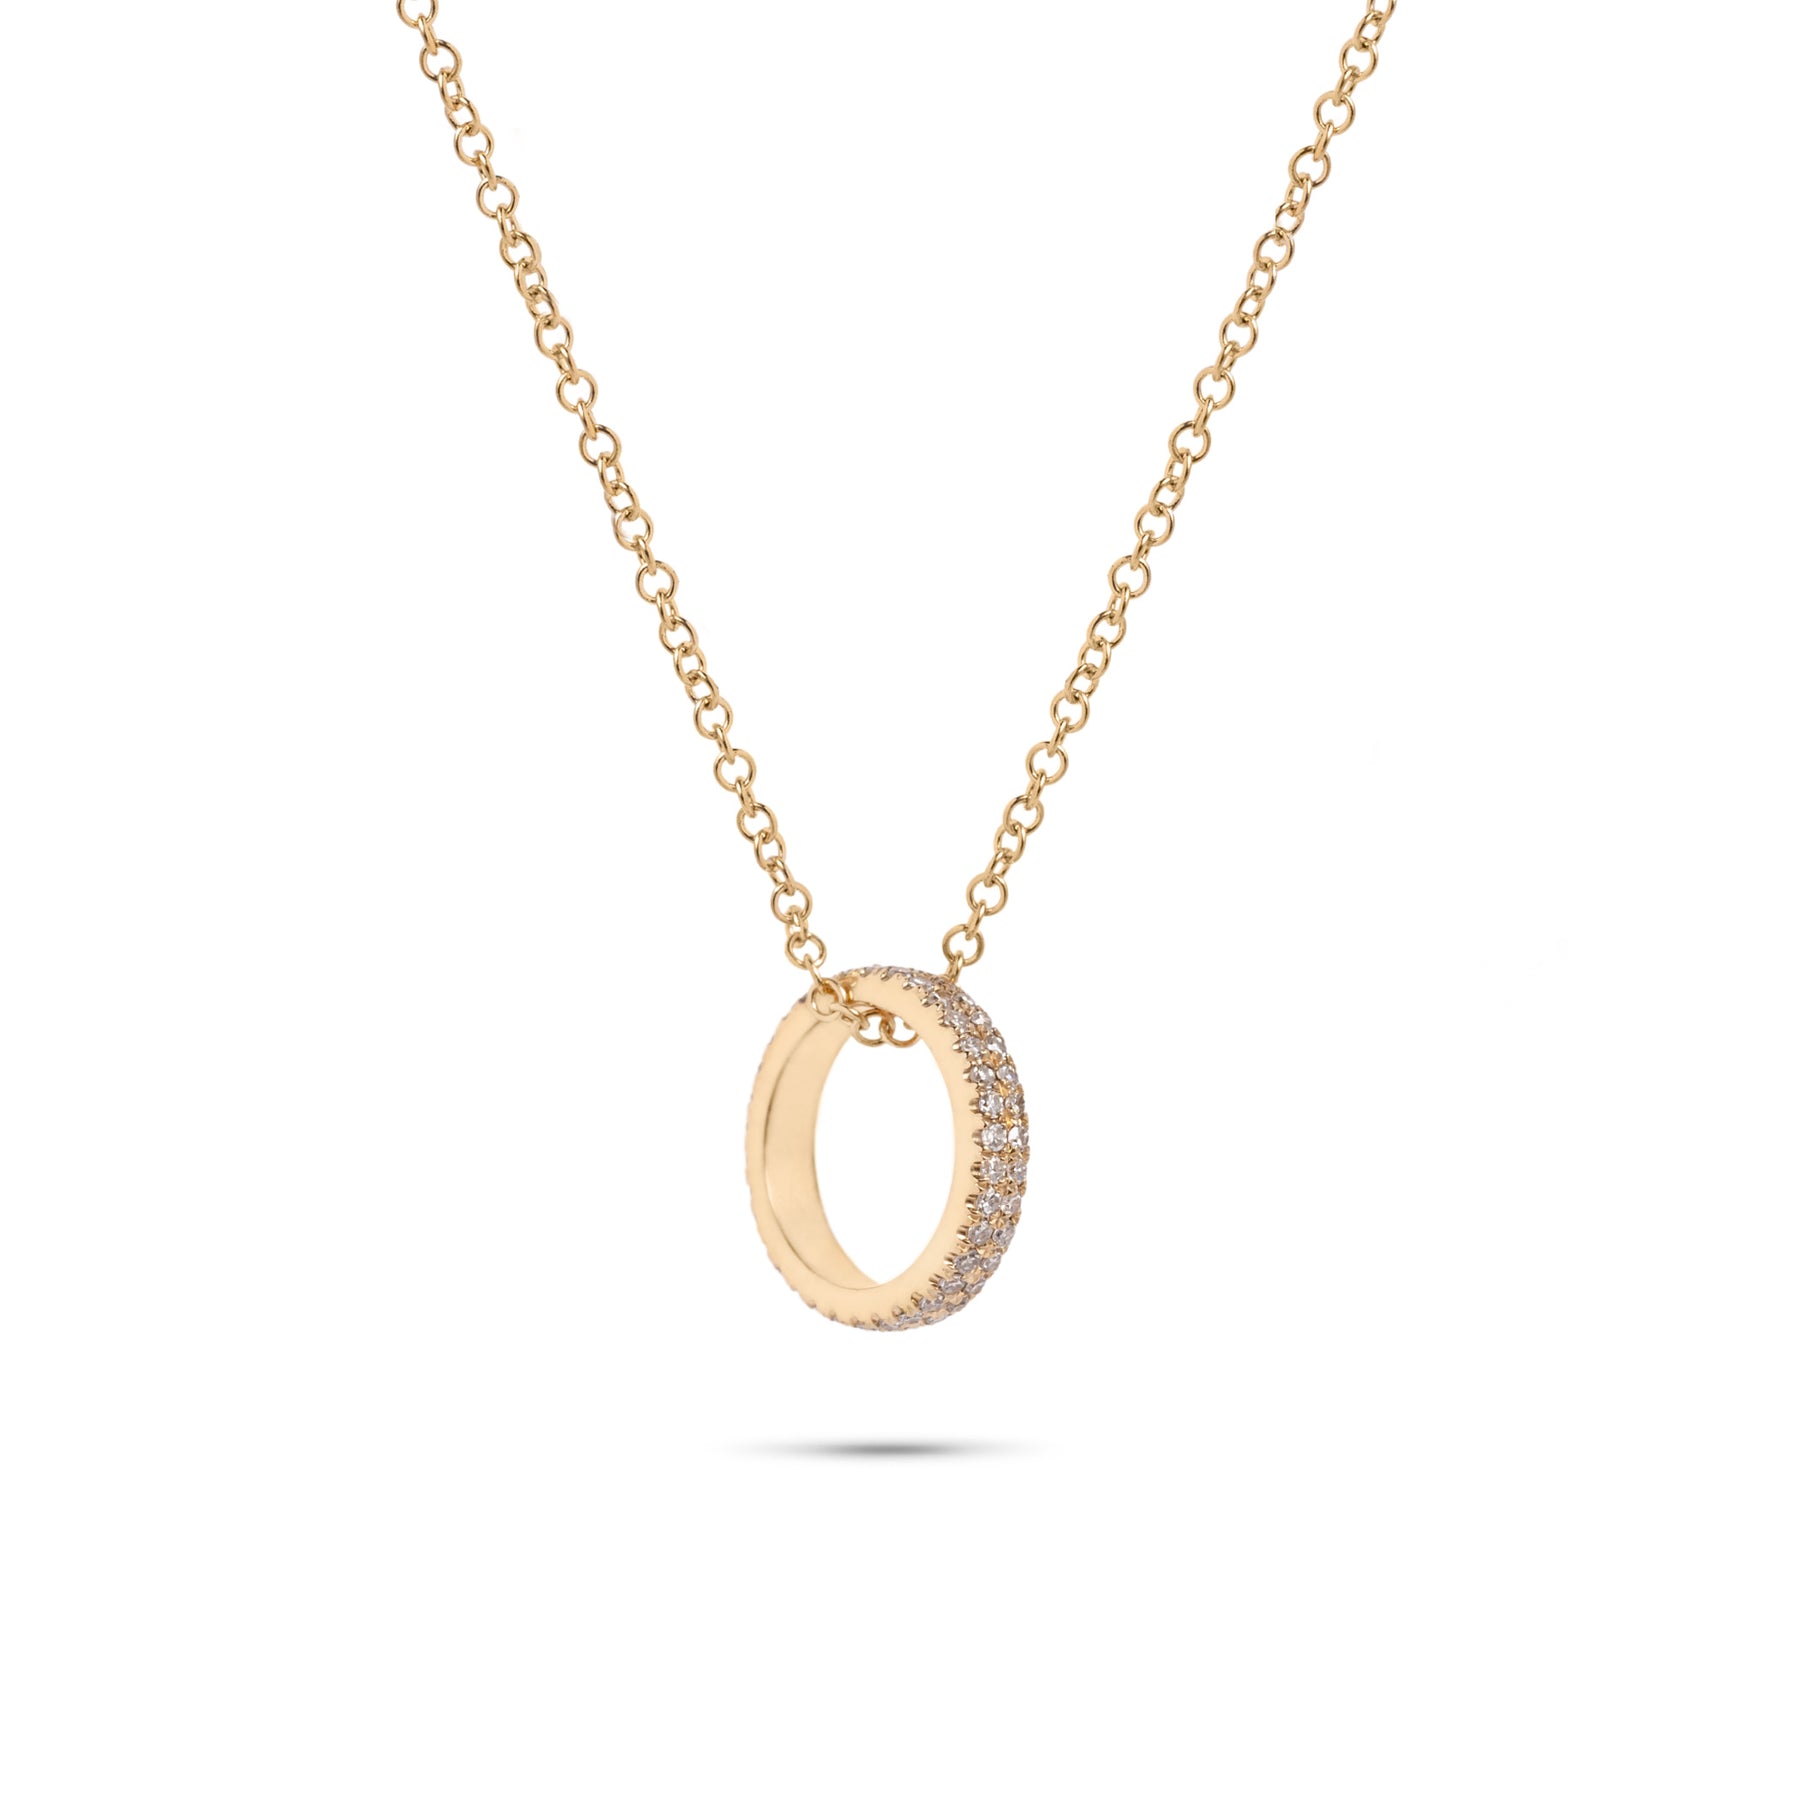 14k yellow gold diamond pave ring pendant necklace